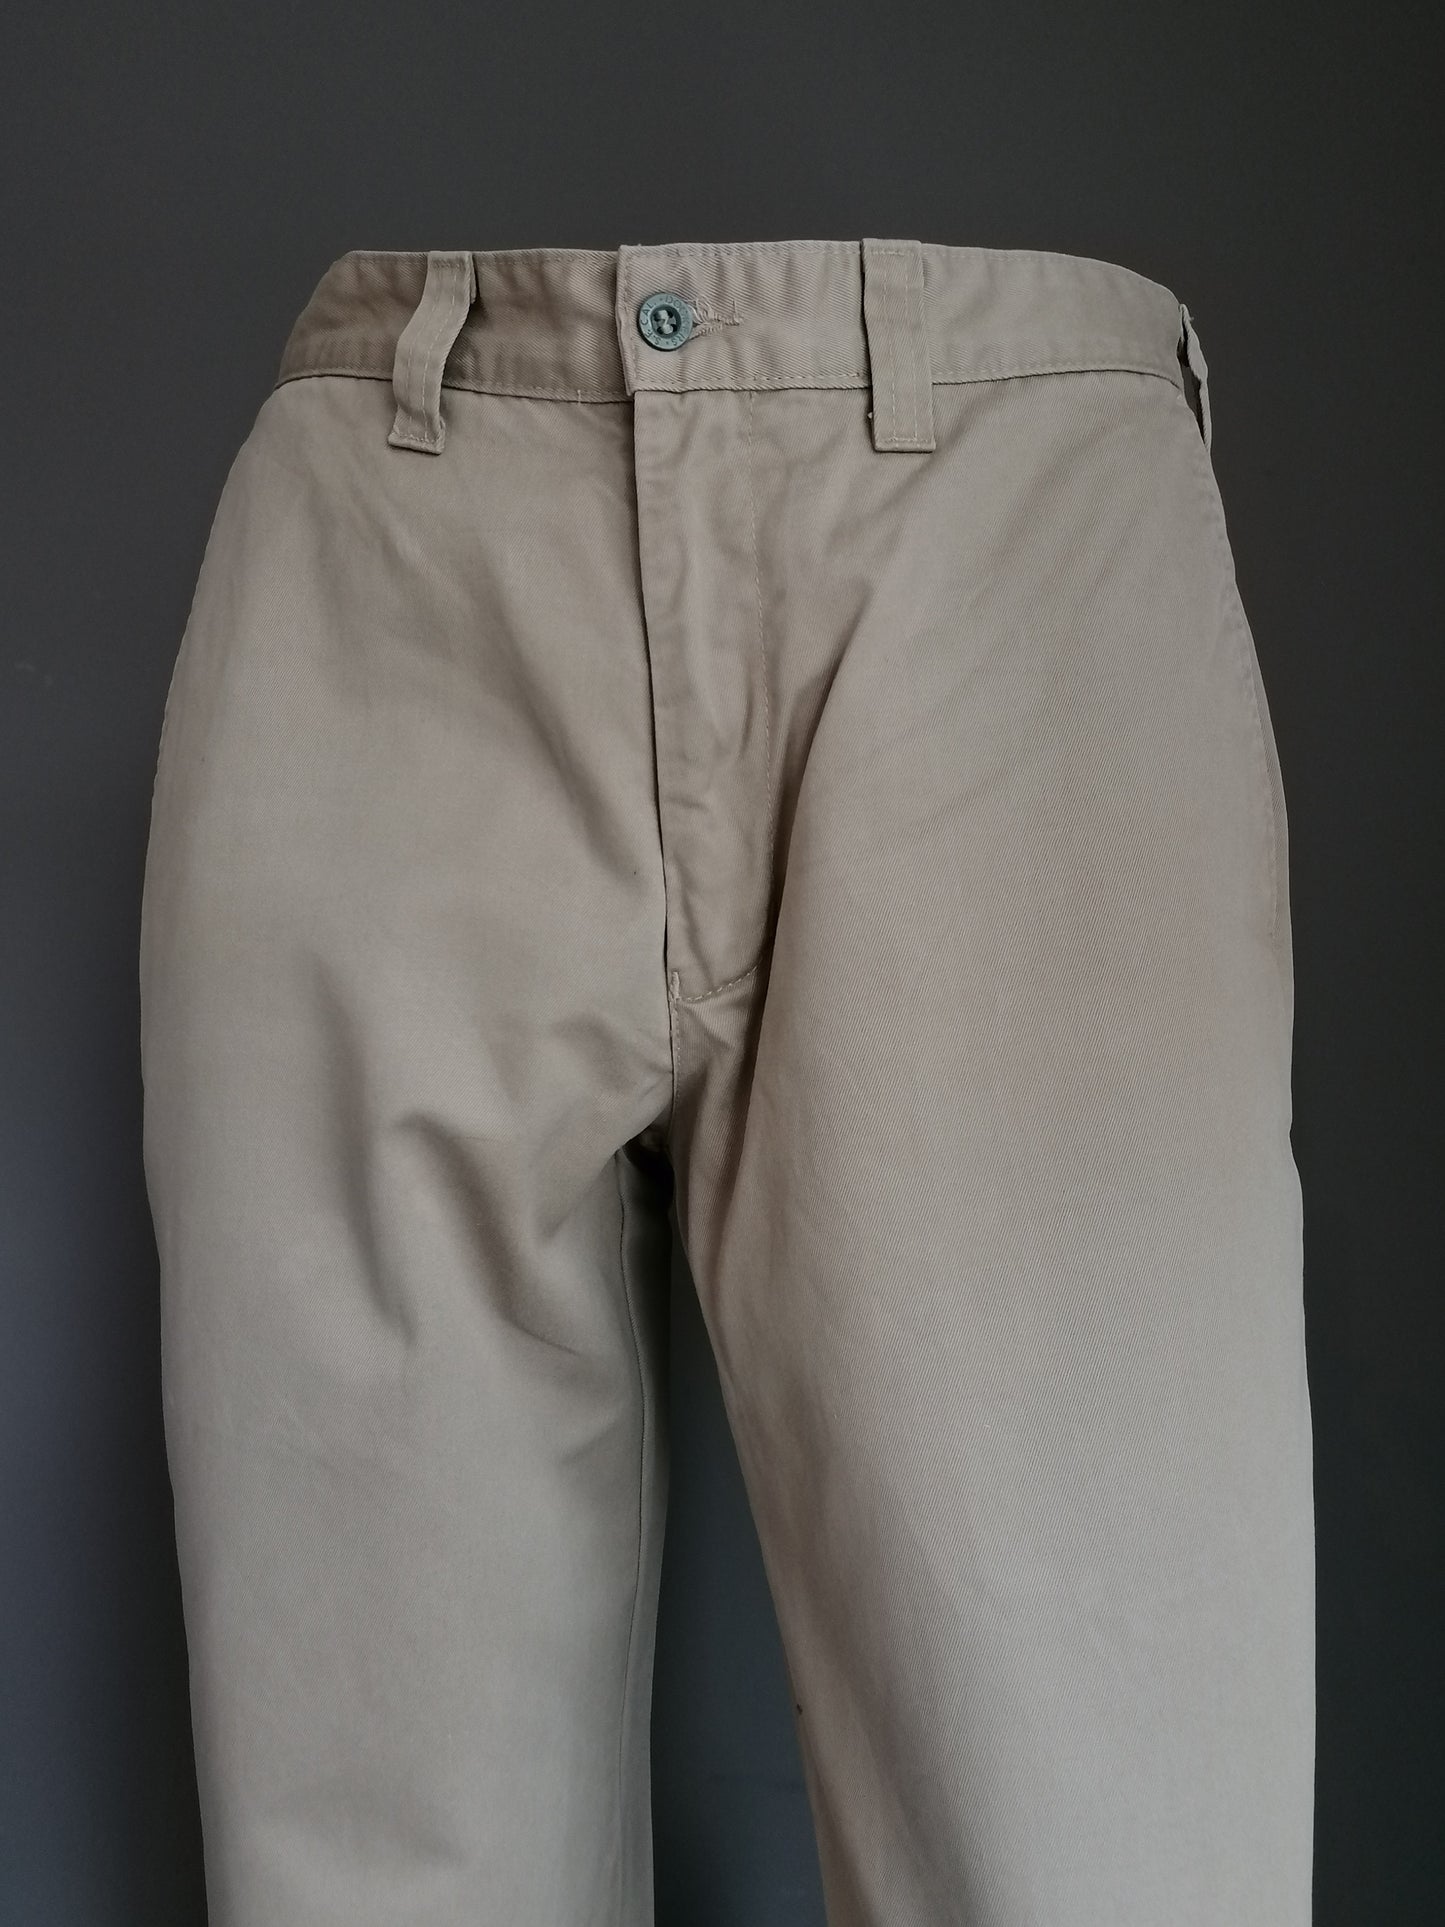 Dockers Khaki broek. Beige gekleurd. Maat W32 - L36